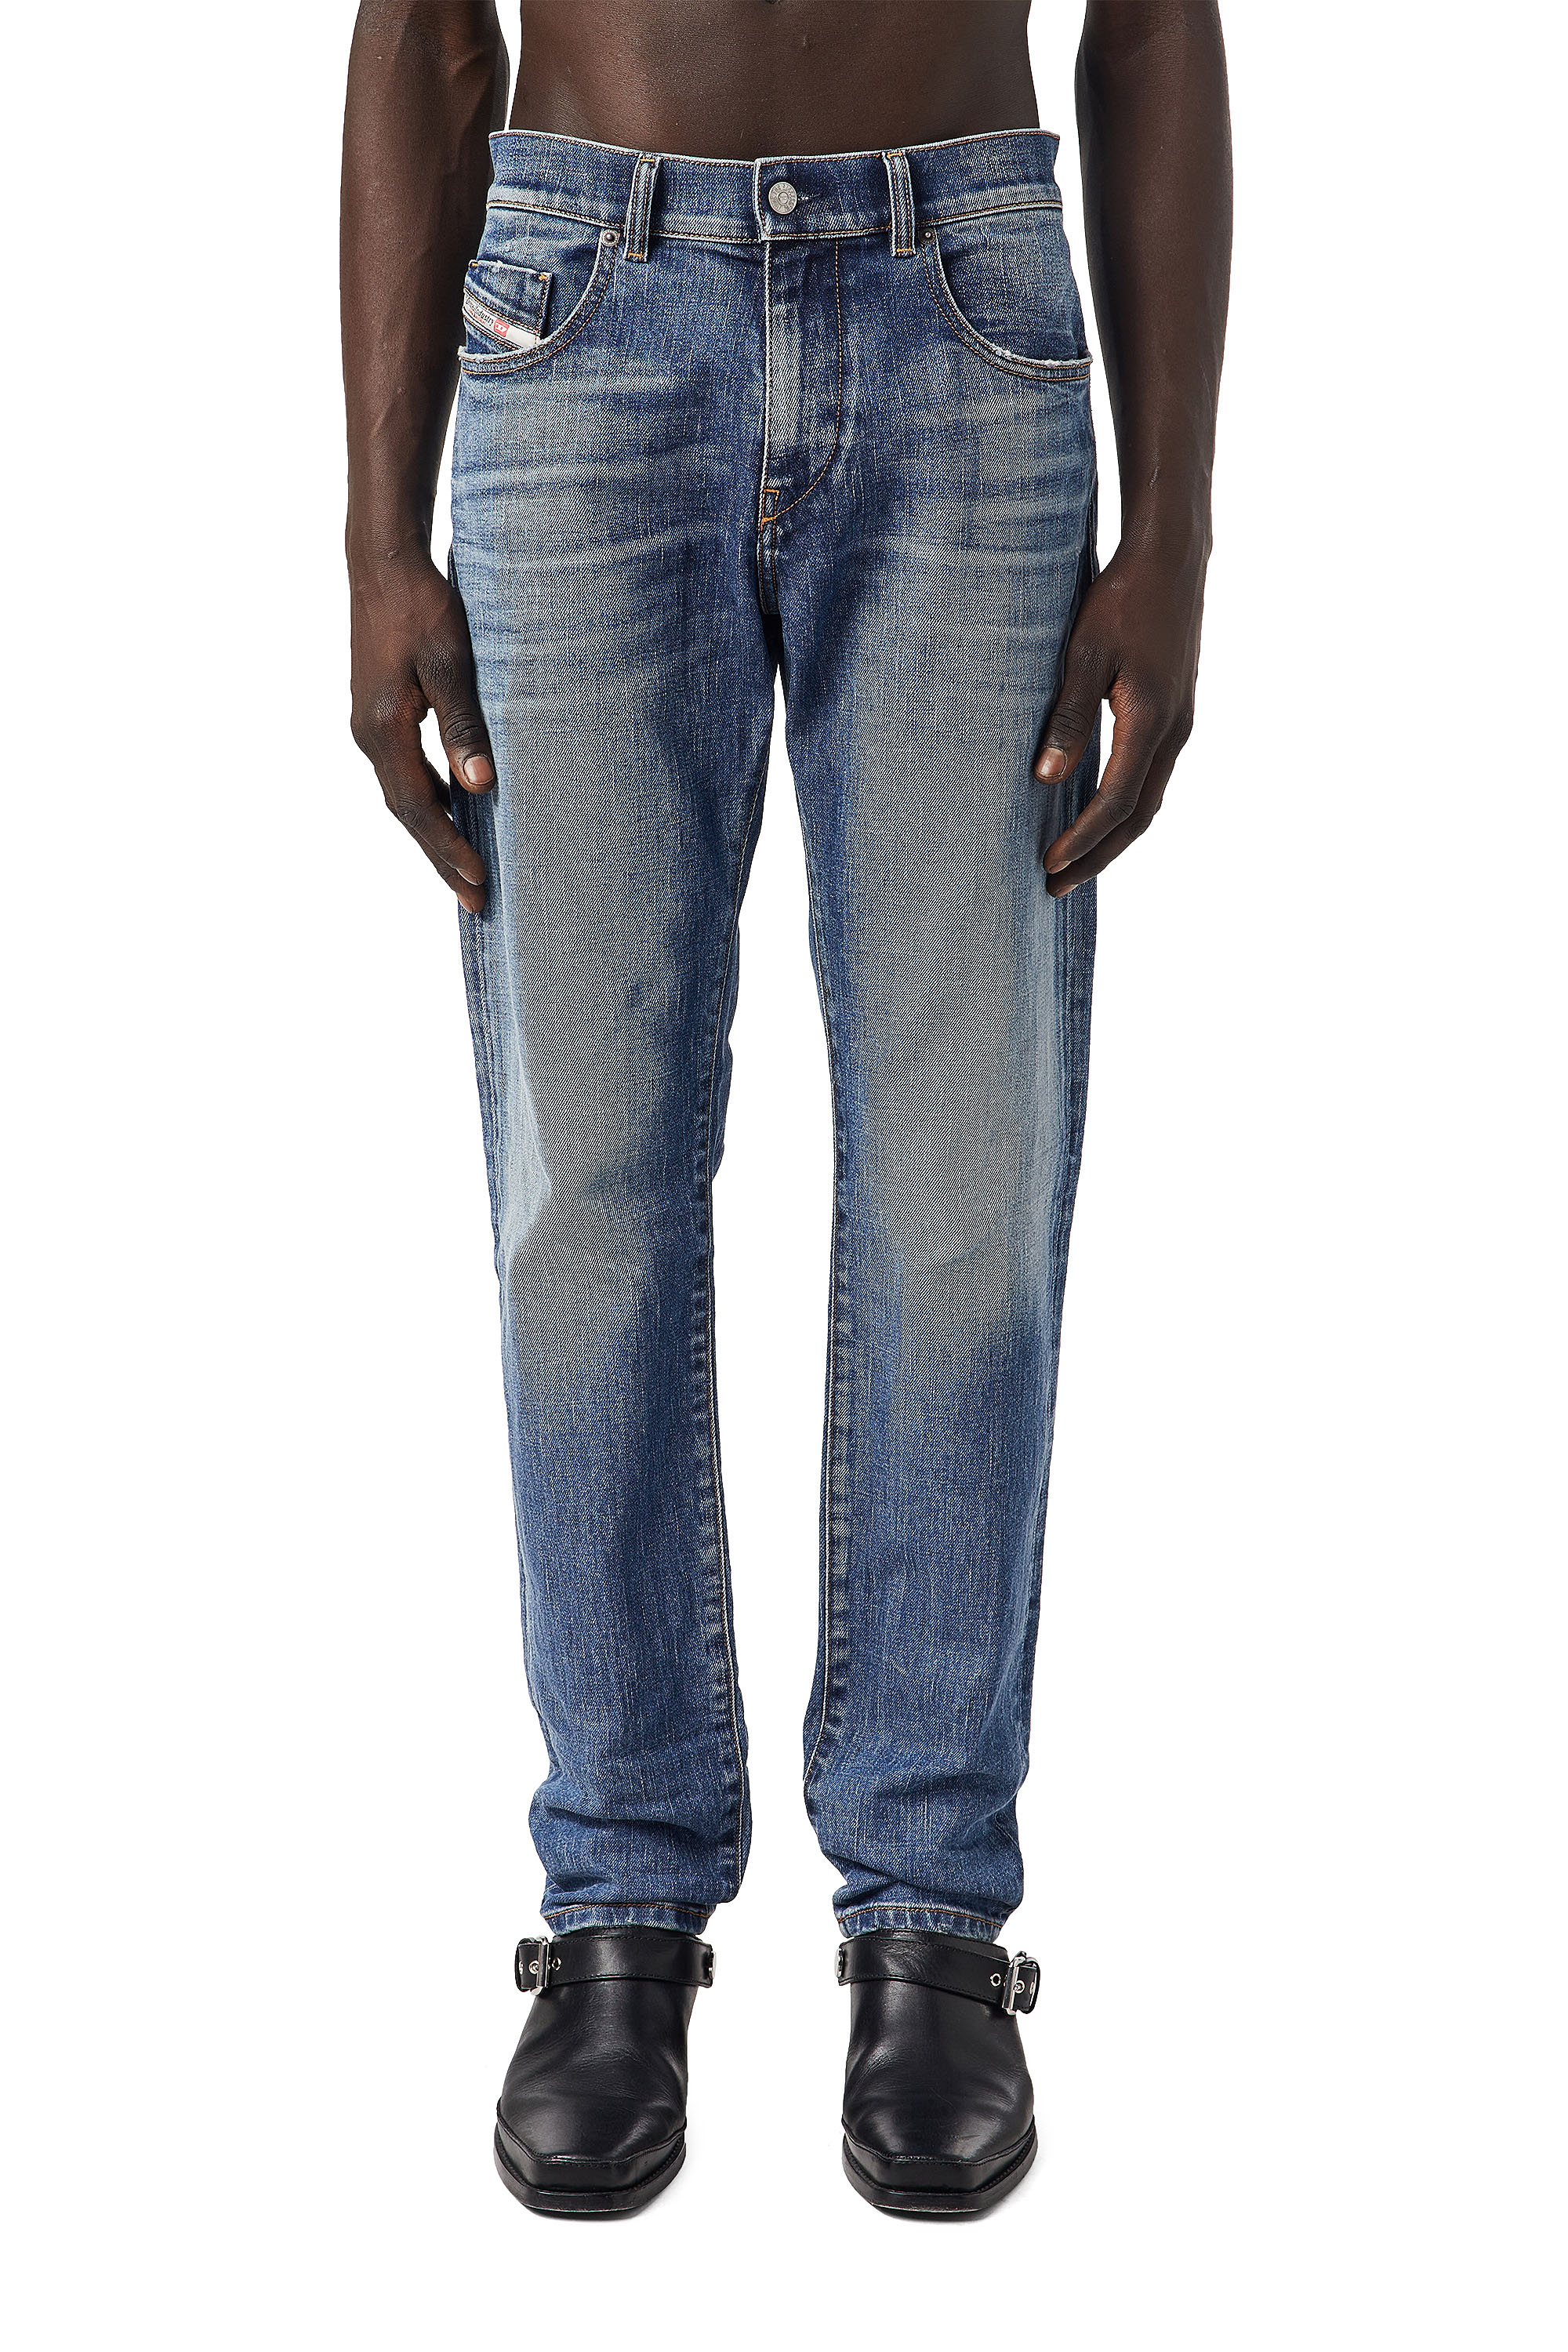 2019 D-STRUKT 09C61 Slim Jeans, Medium blue - Jeans